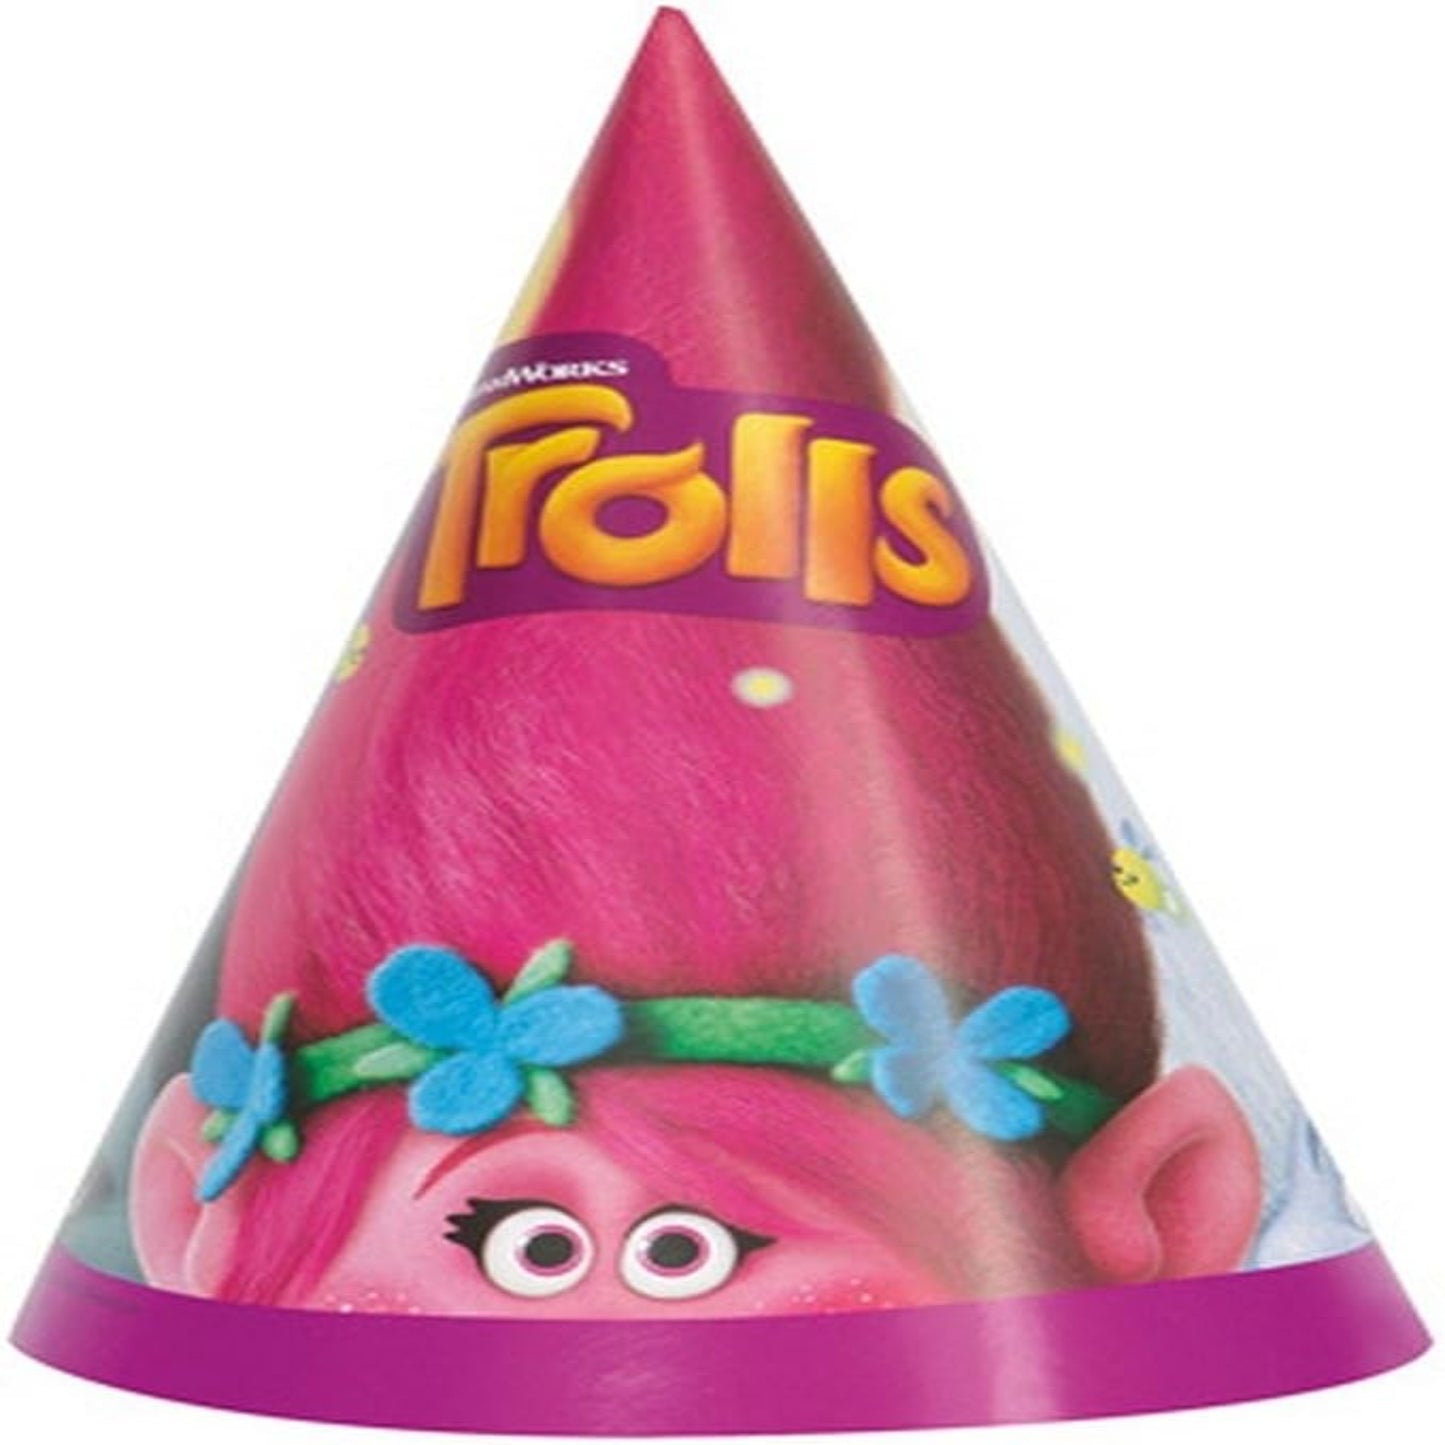 Trolls Party Hats